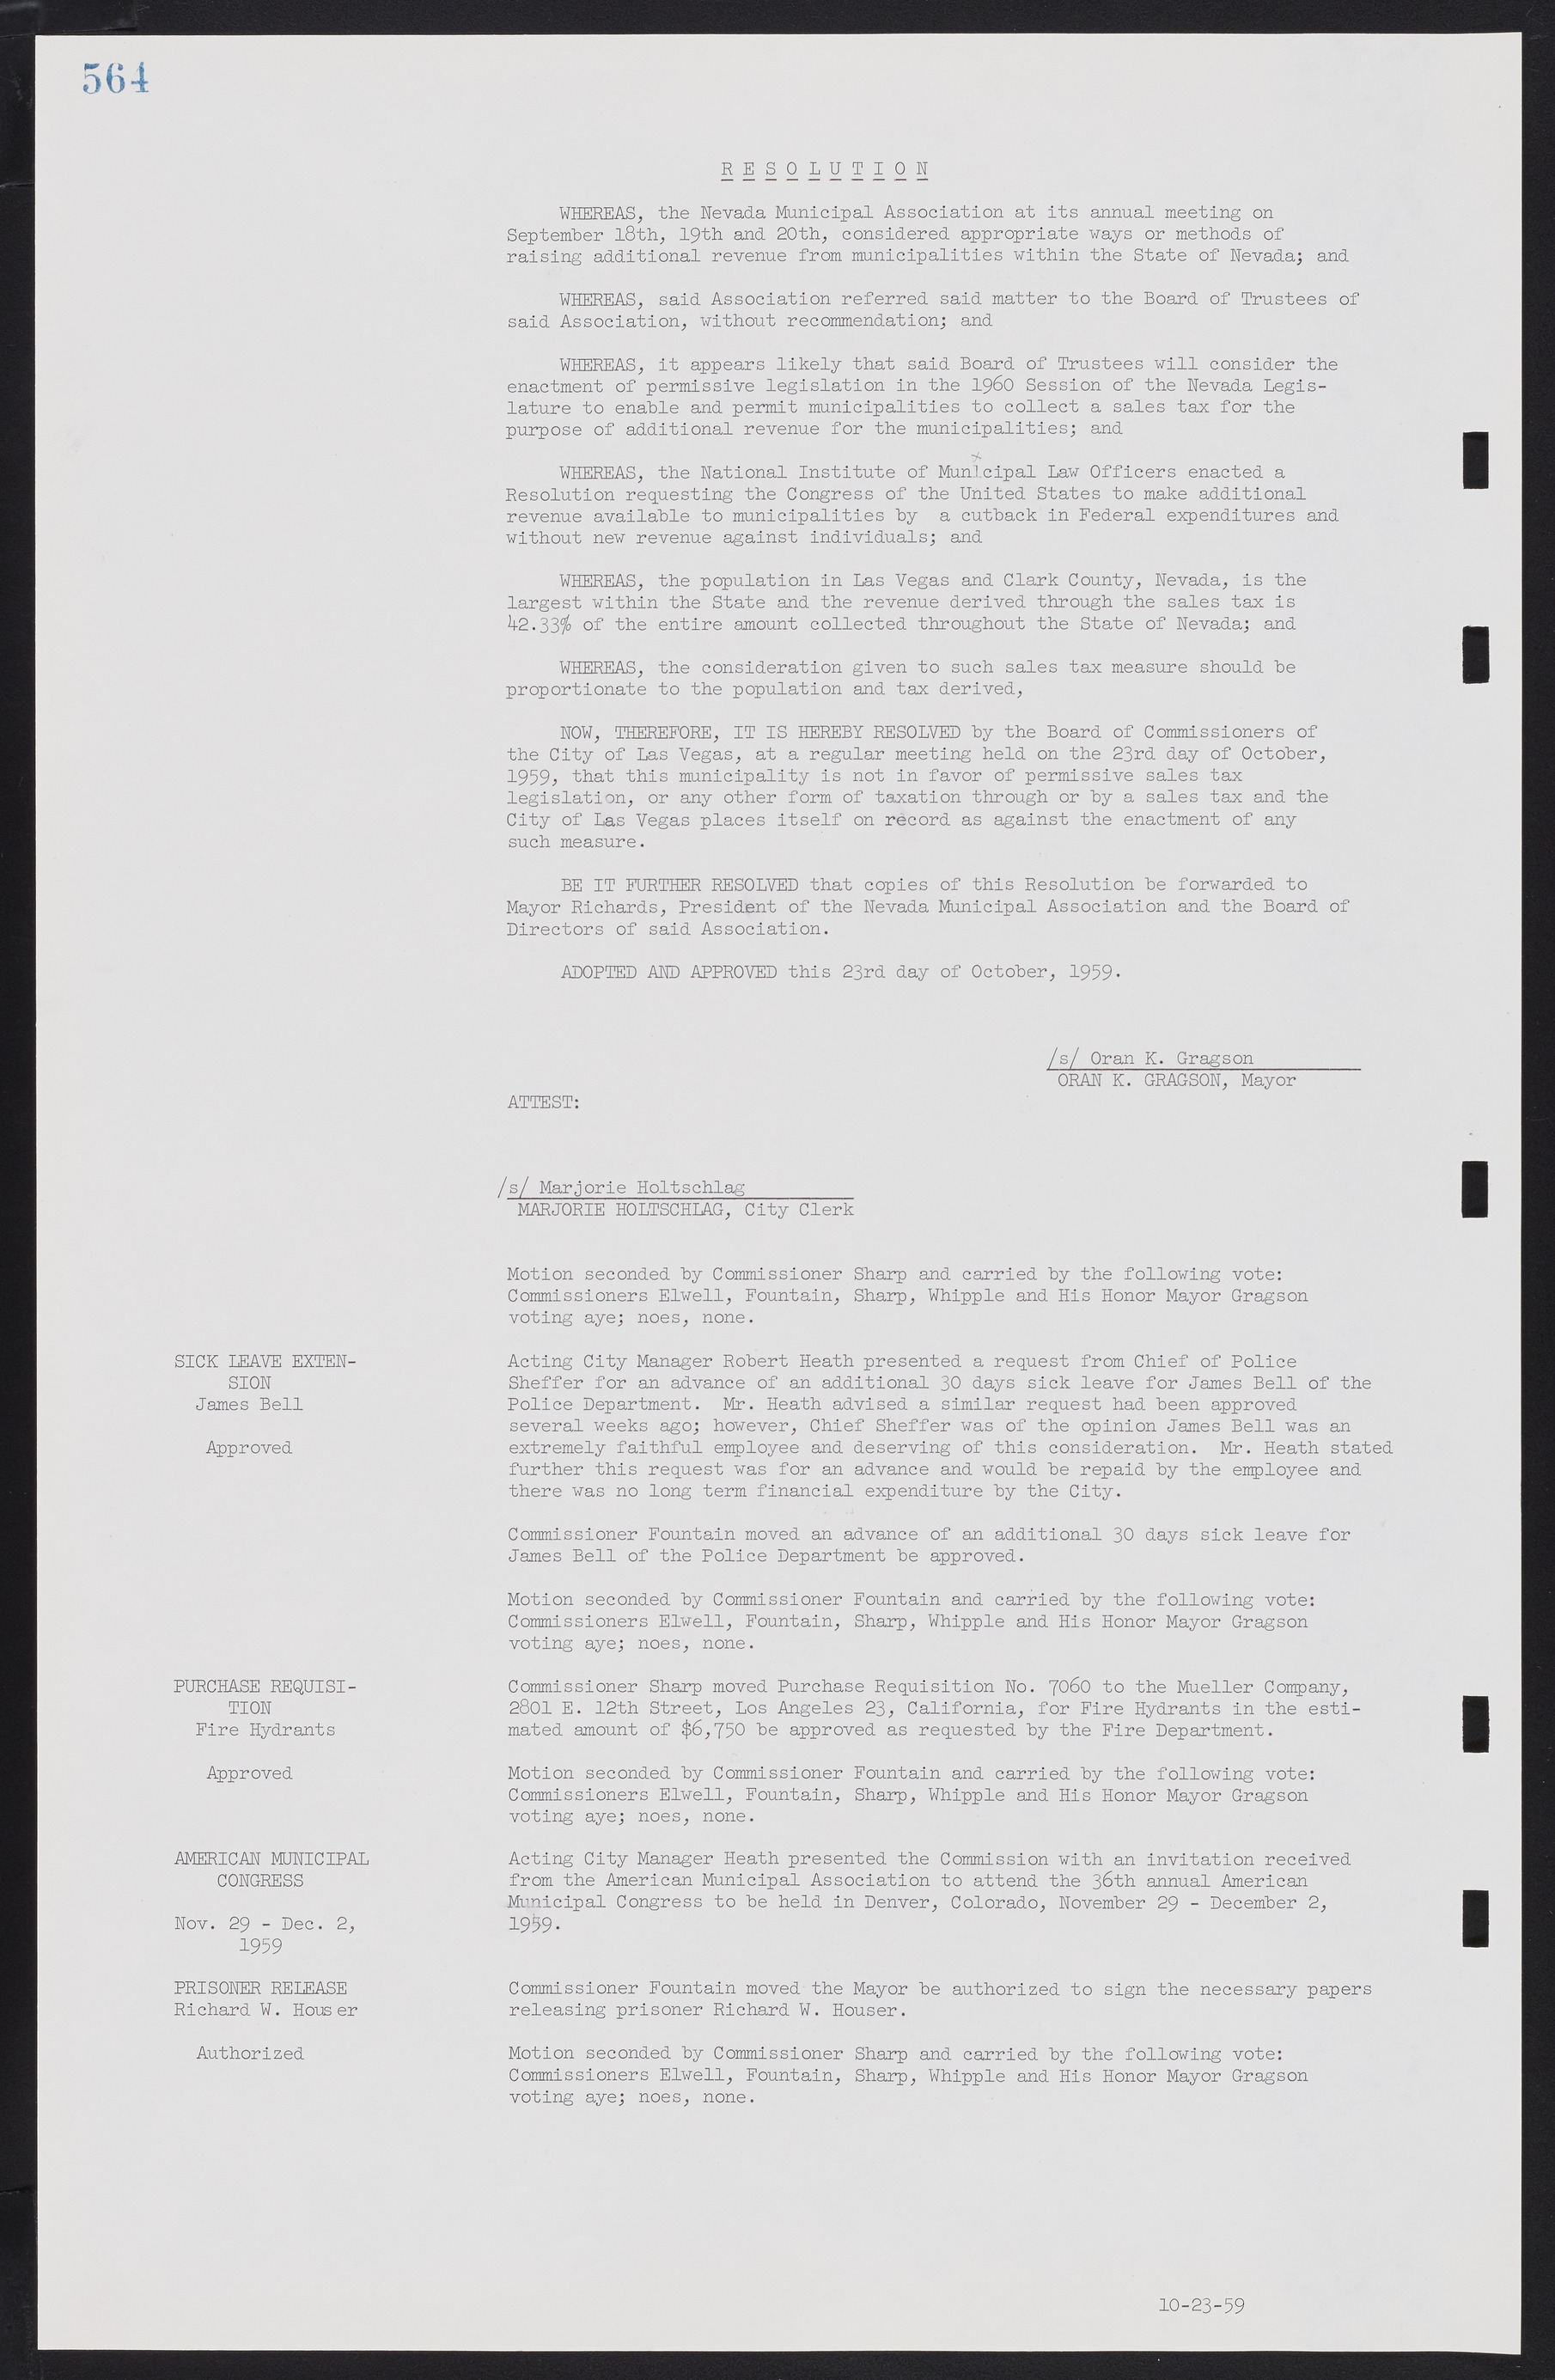 Las Vegas City Commission Minutes, November 20, 1957 to December 2, 1959, lvc000011-600